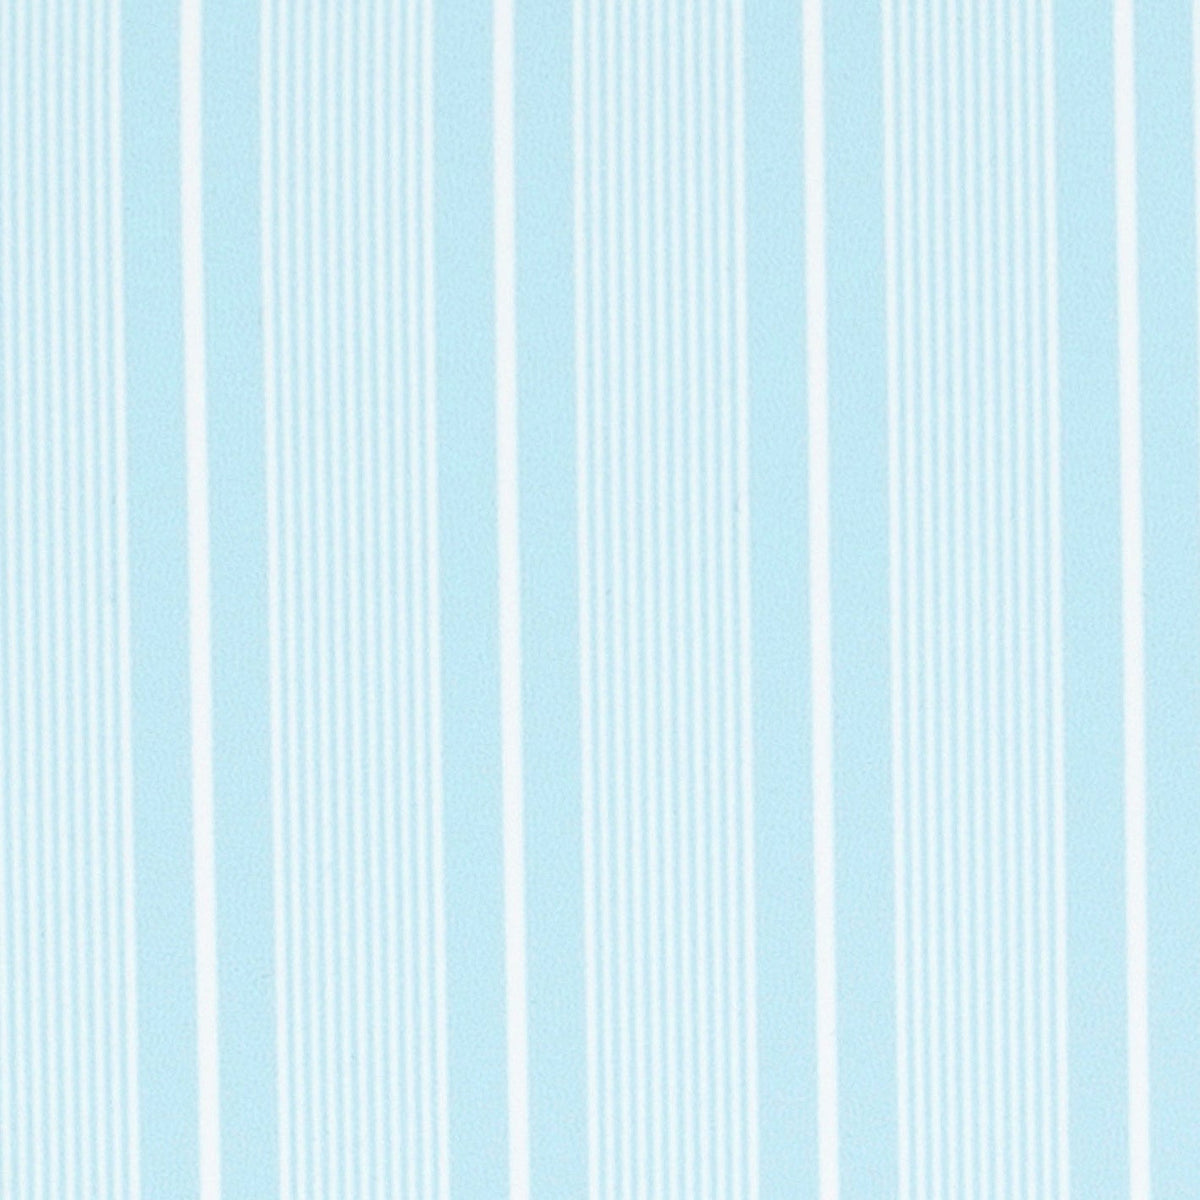 Unisex Pacific Blue Stripe Long Sleeve Rashguard One Piece